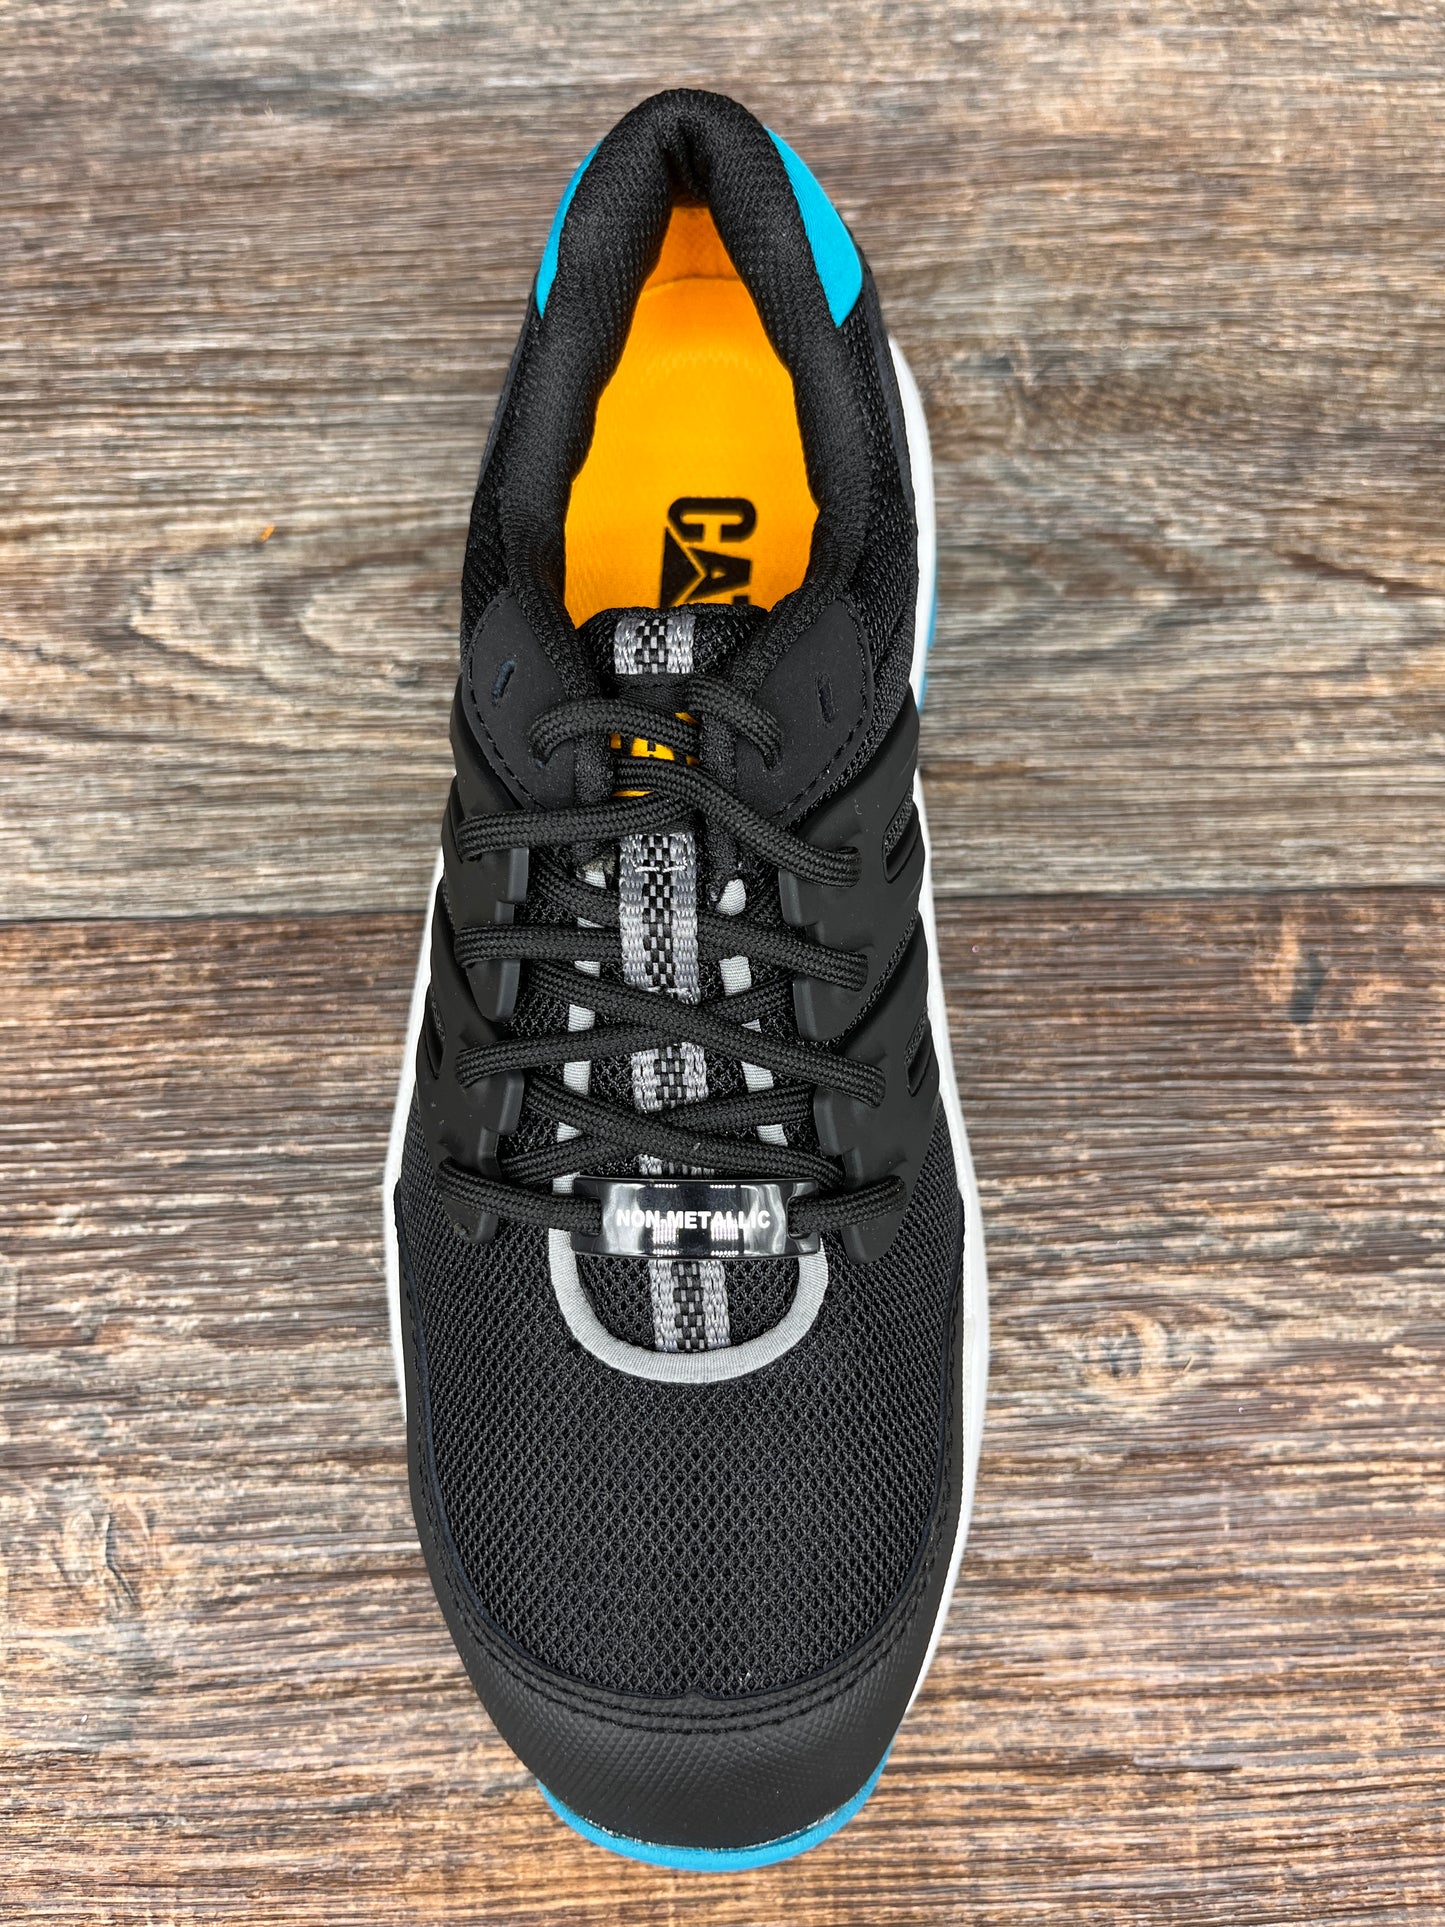 p91357 Women's Streamline 2.0 Composite Toe Athletic Shoe by Caterpillar